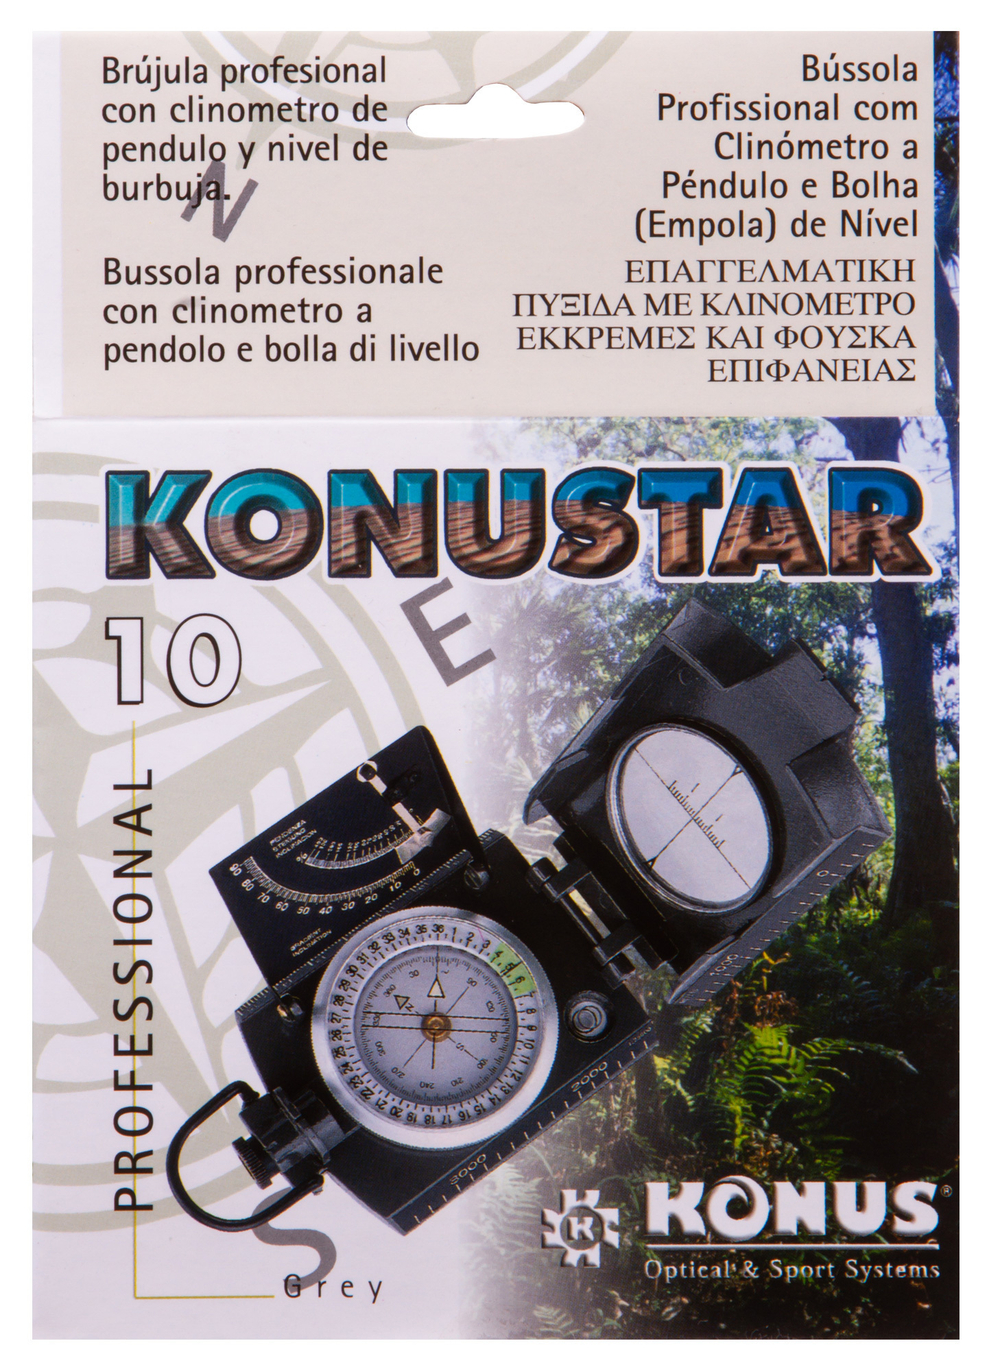 Компас Konus Konustar-10 Grey